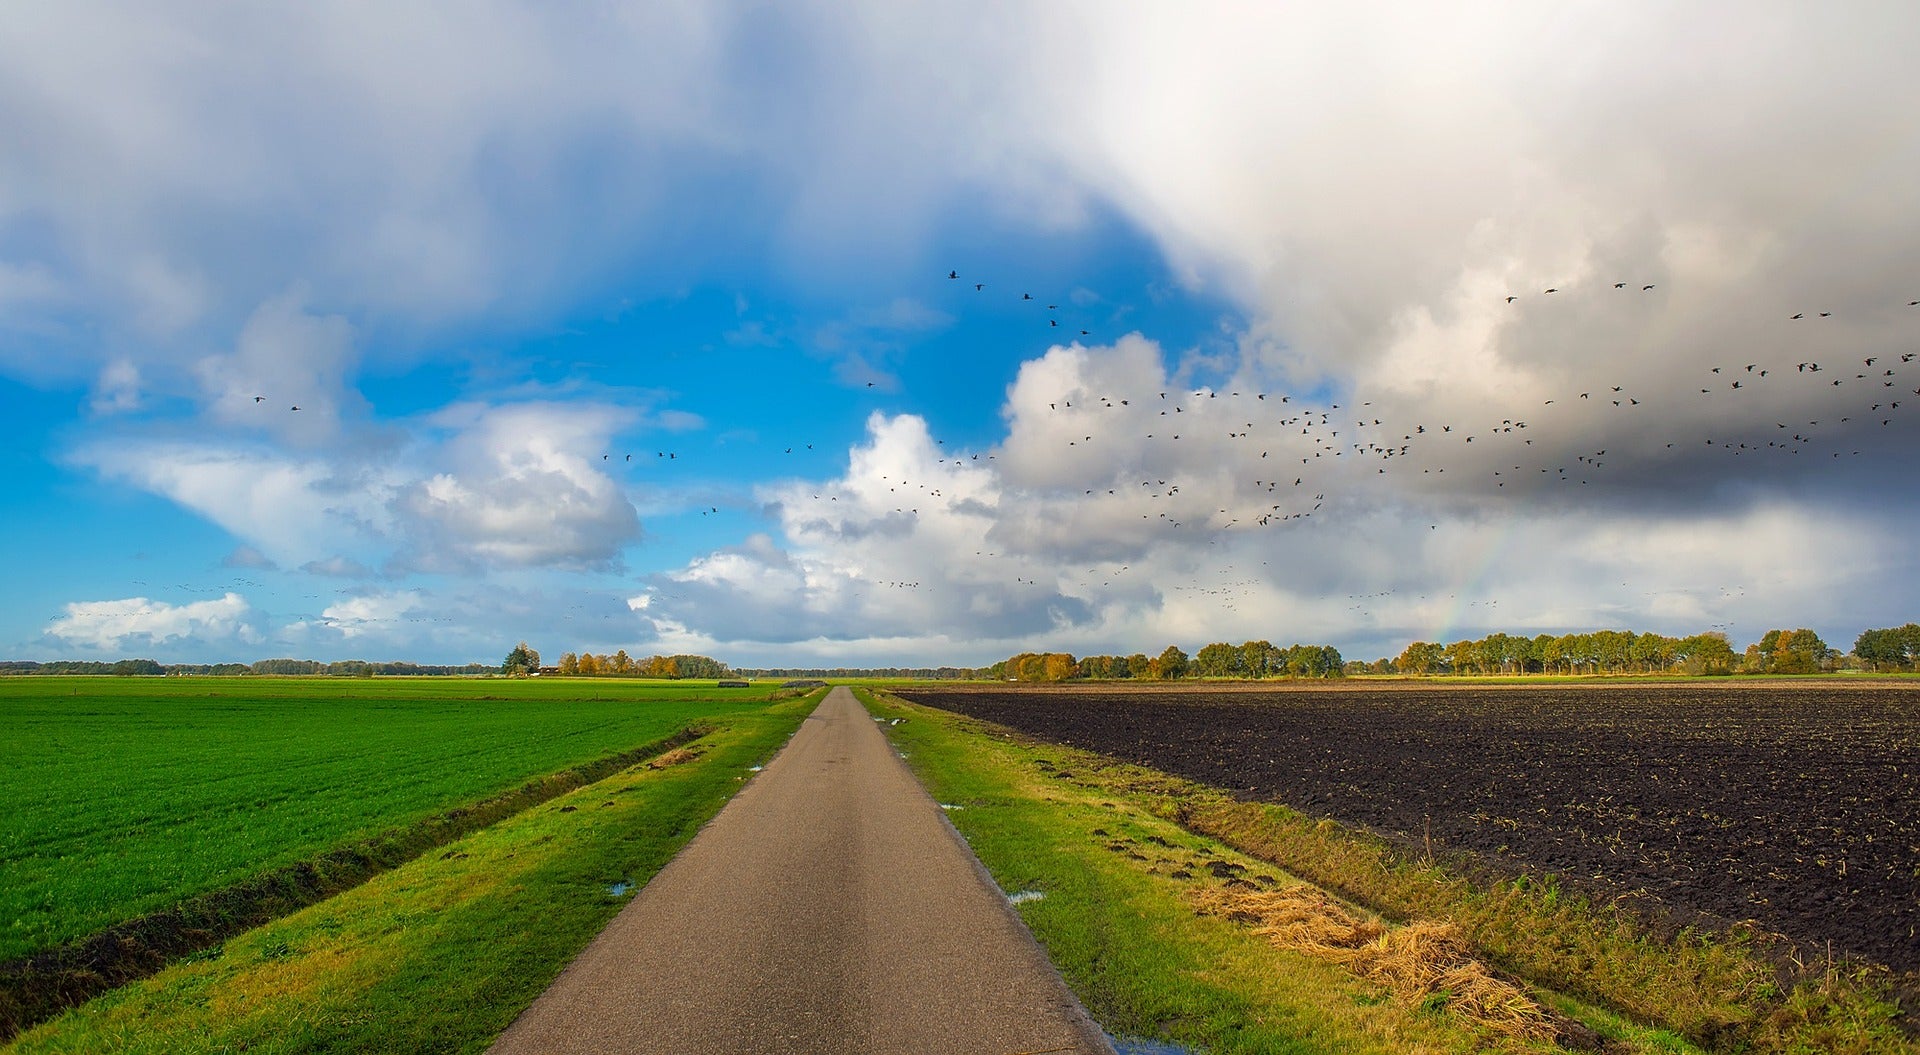 Birds migrating over farm fields